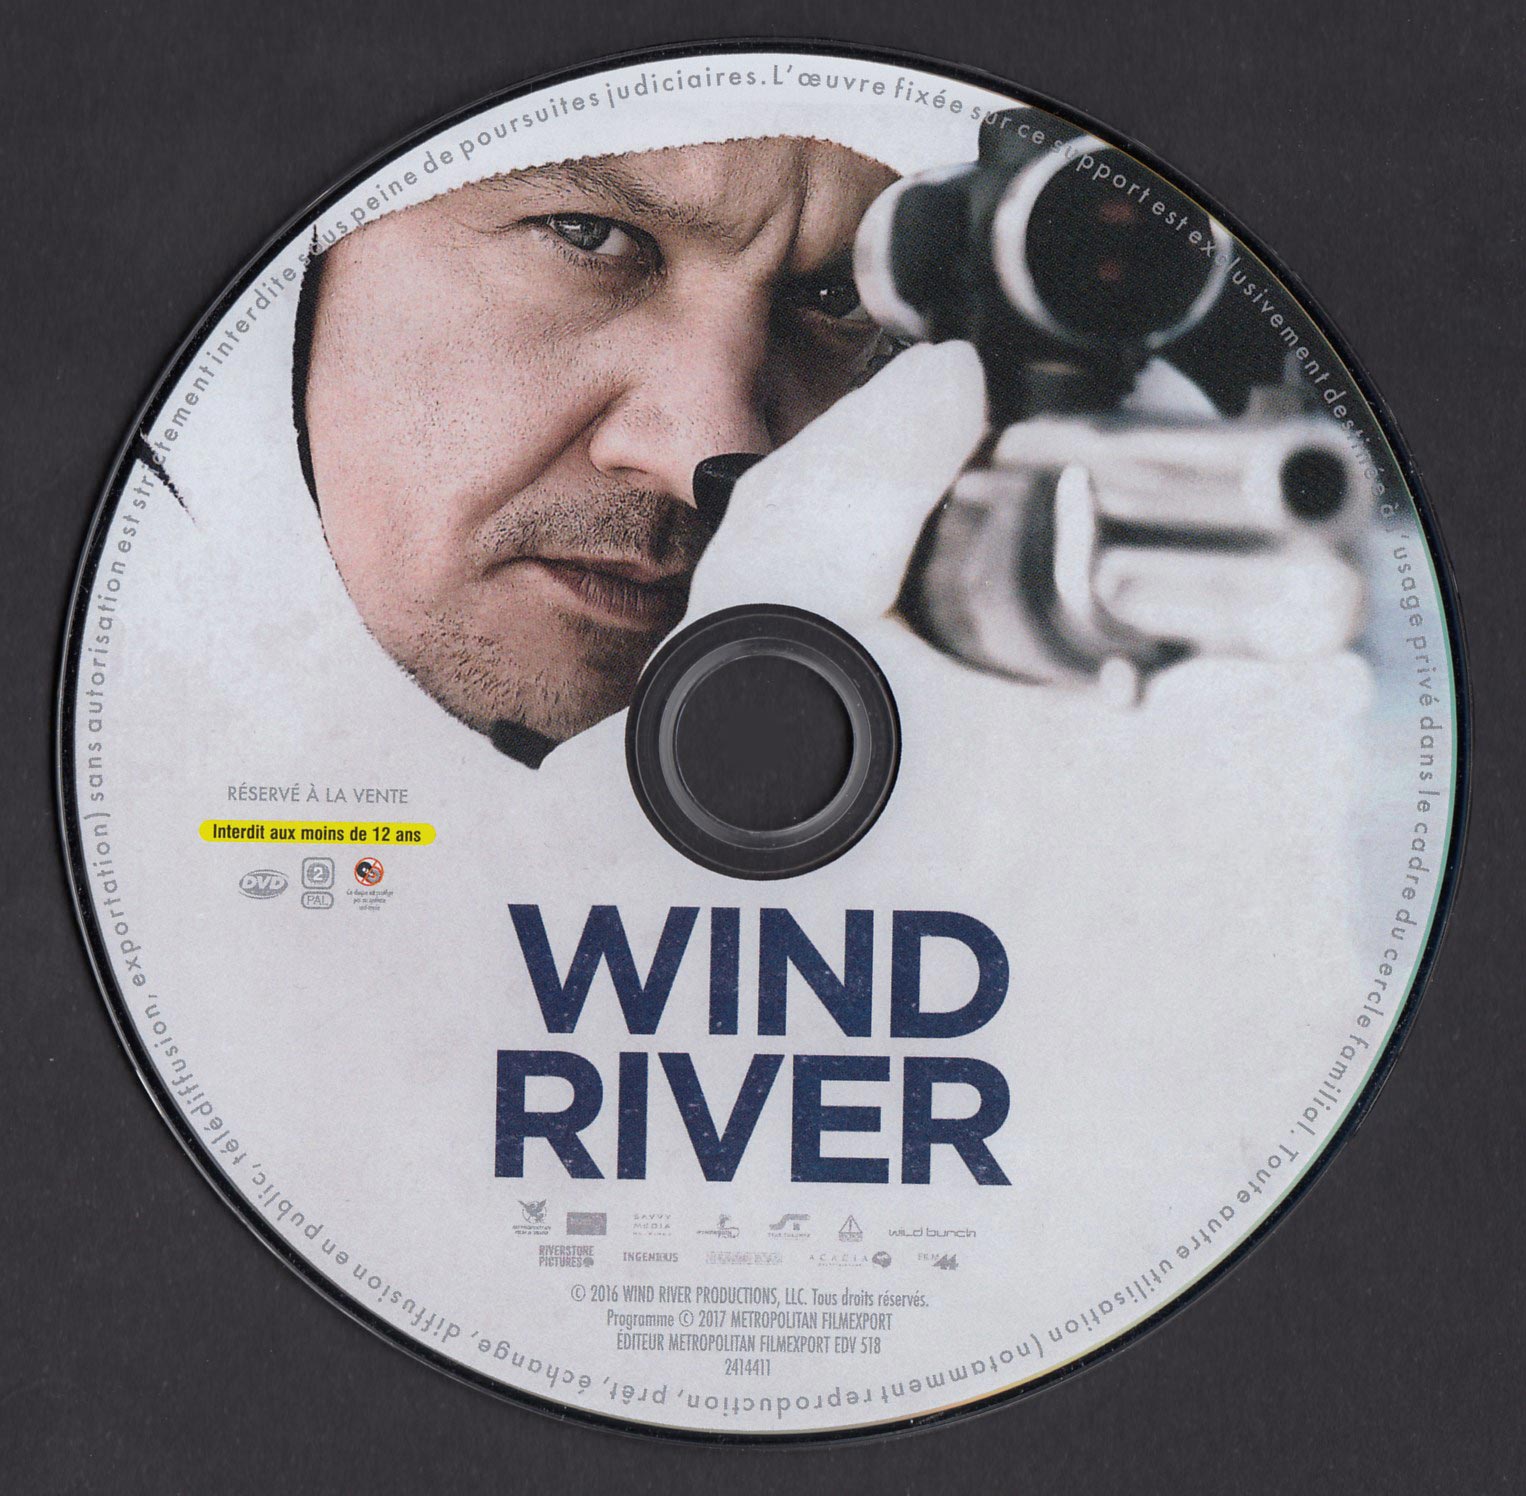 Wind river